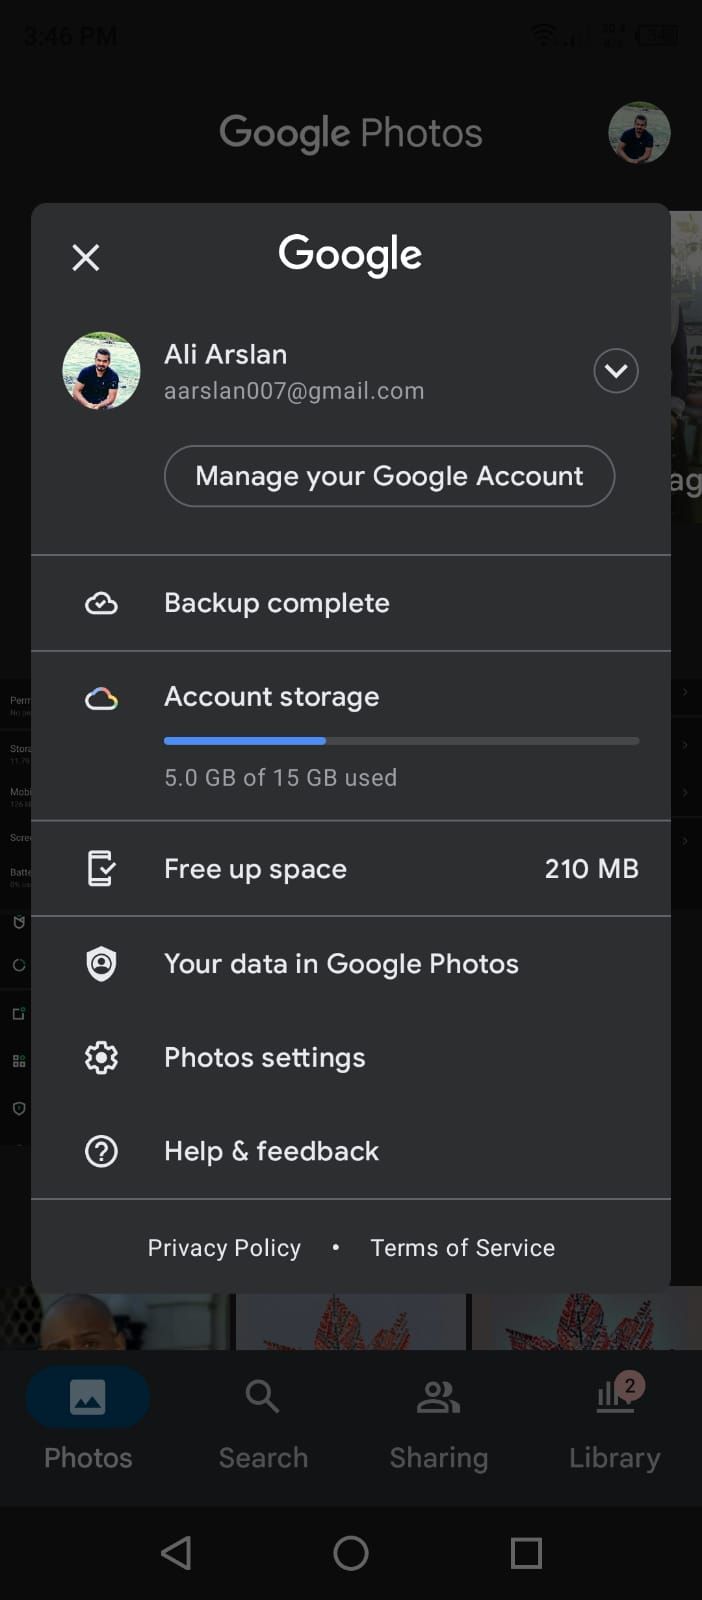 Google Photos App - Free Up Space Option